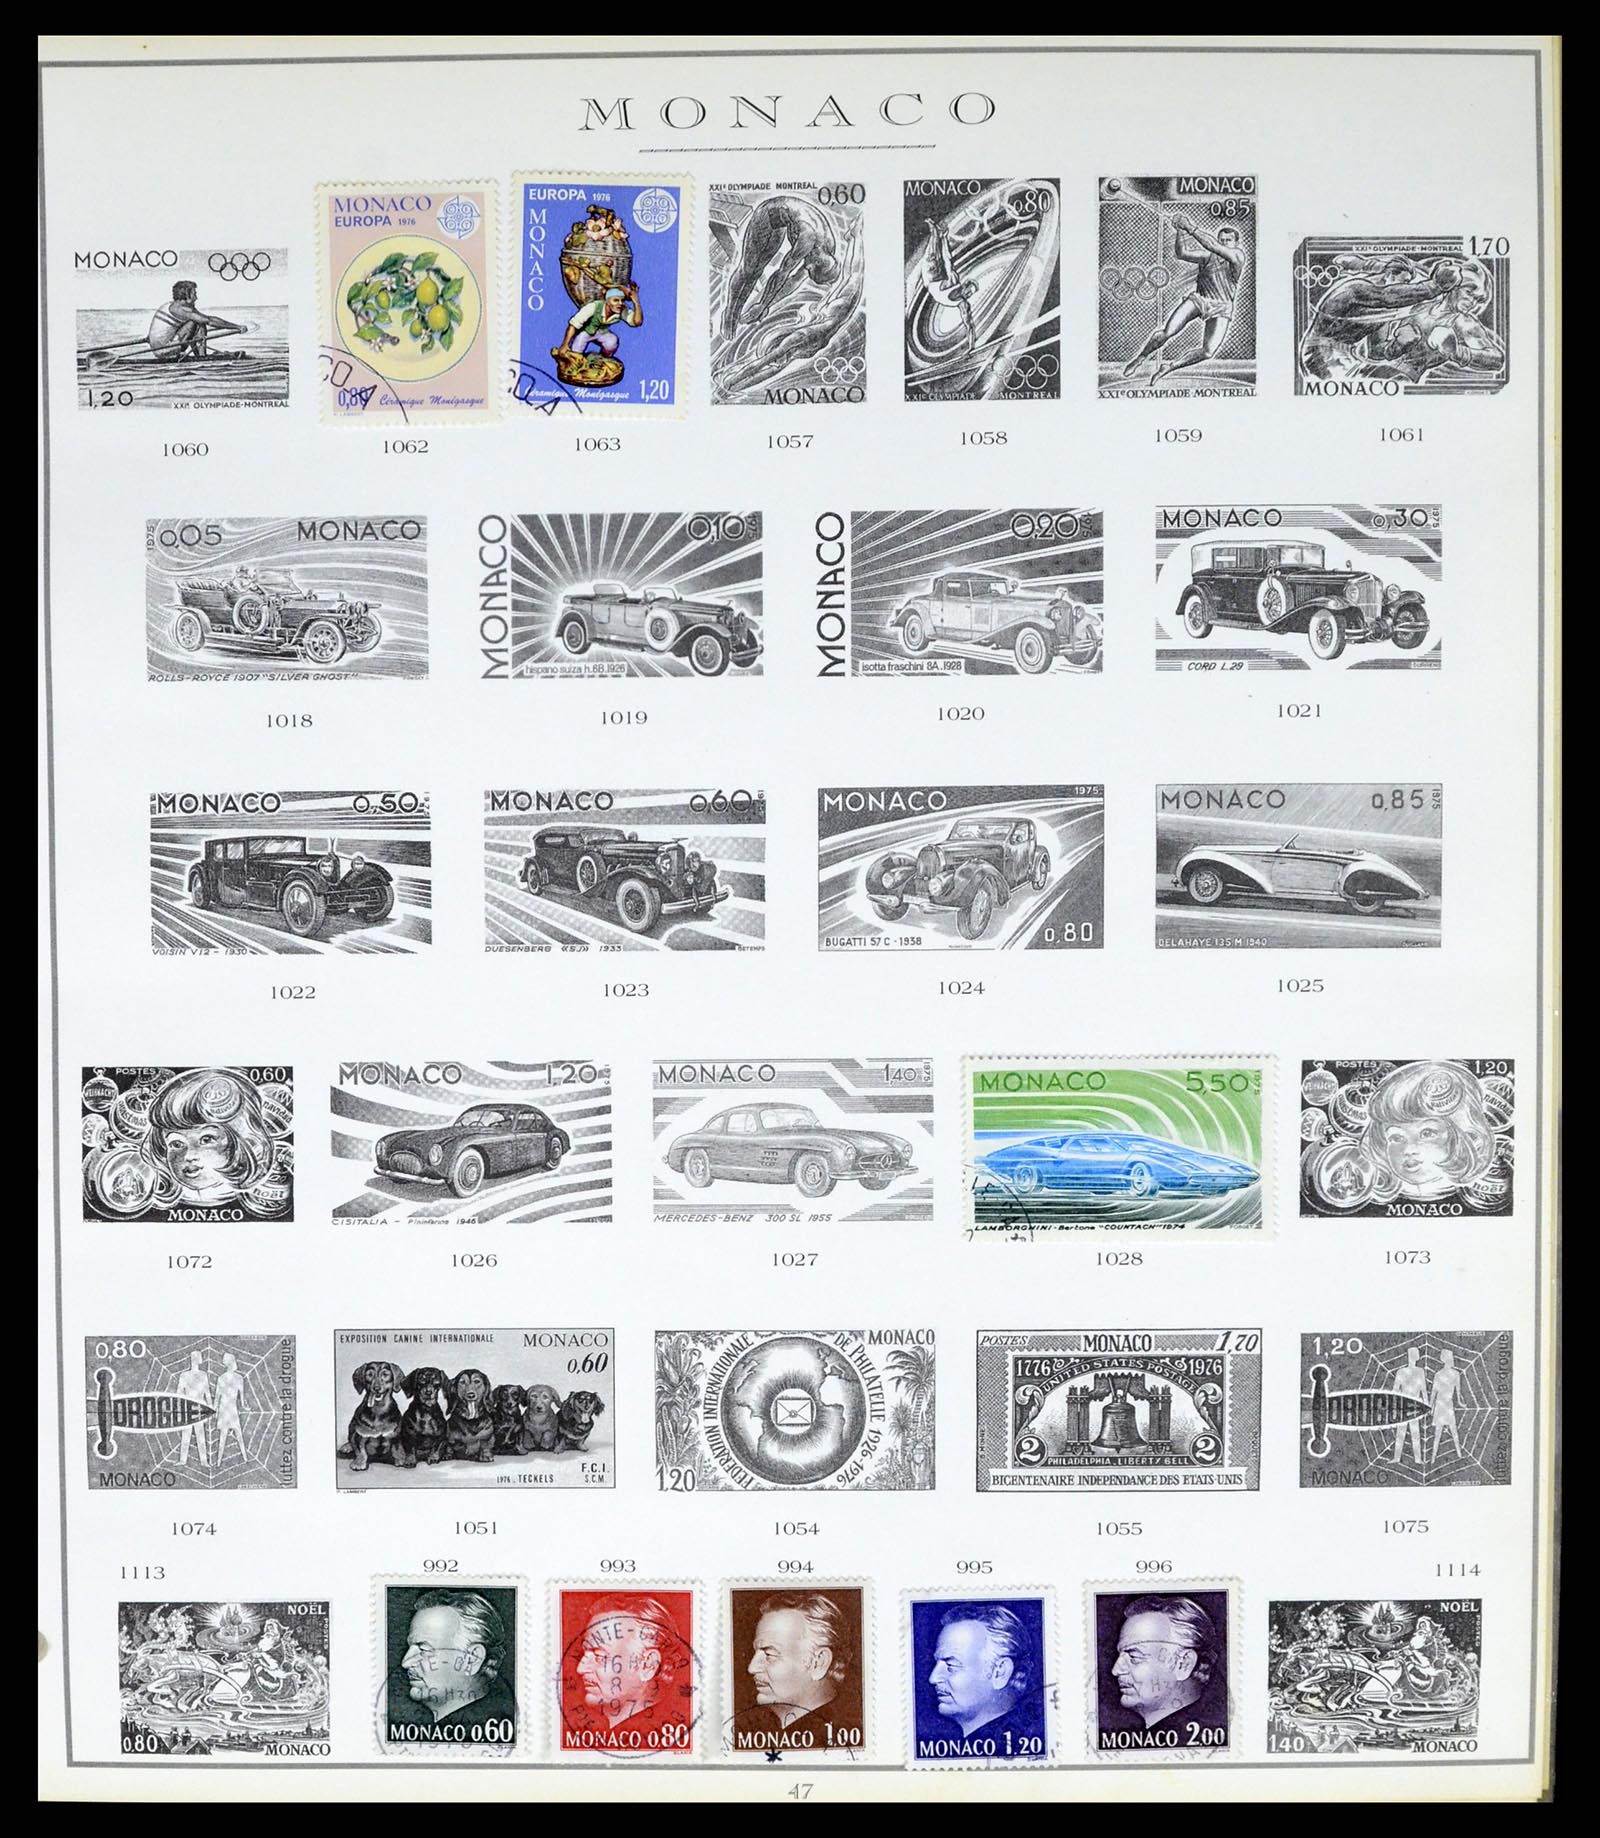 37437 092 - Stamp collection 37437 Monaco 1885-1996.